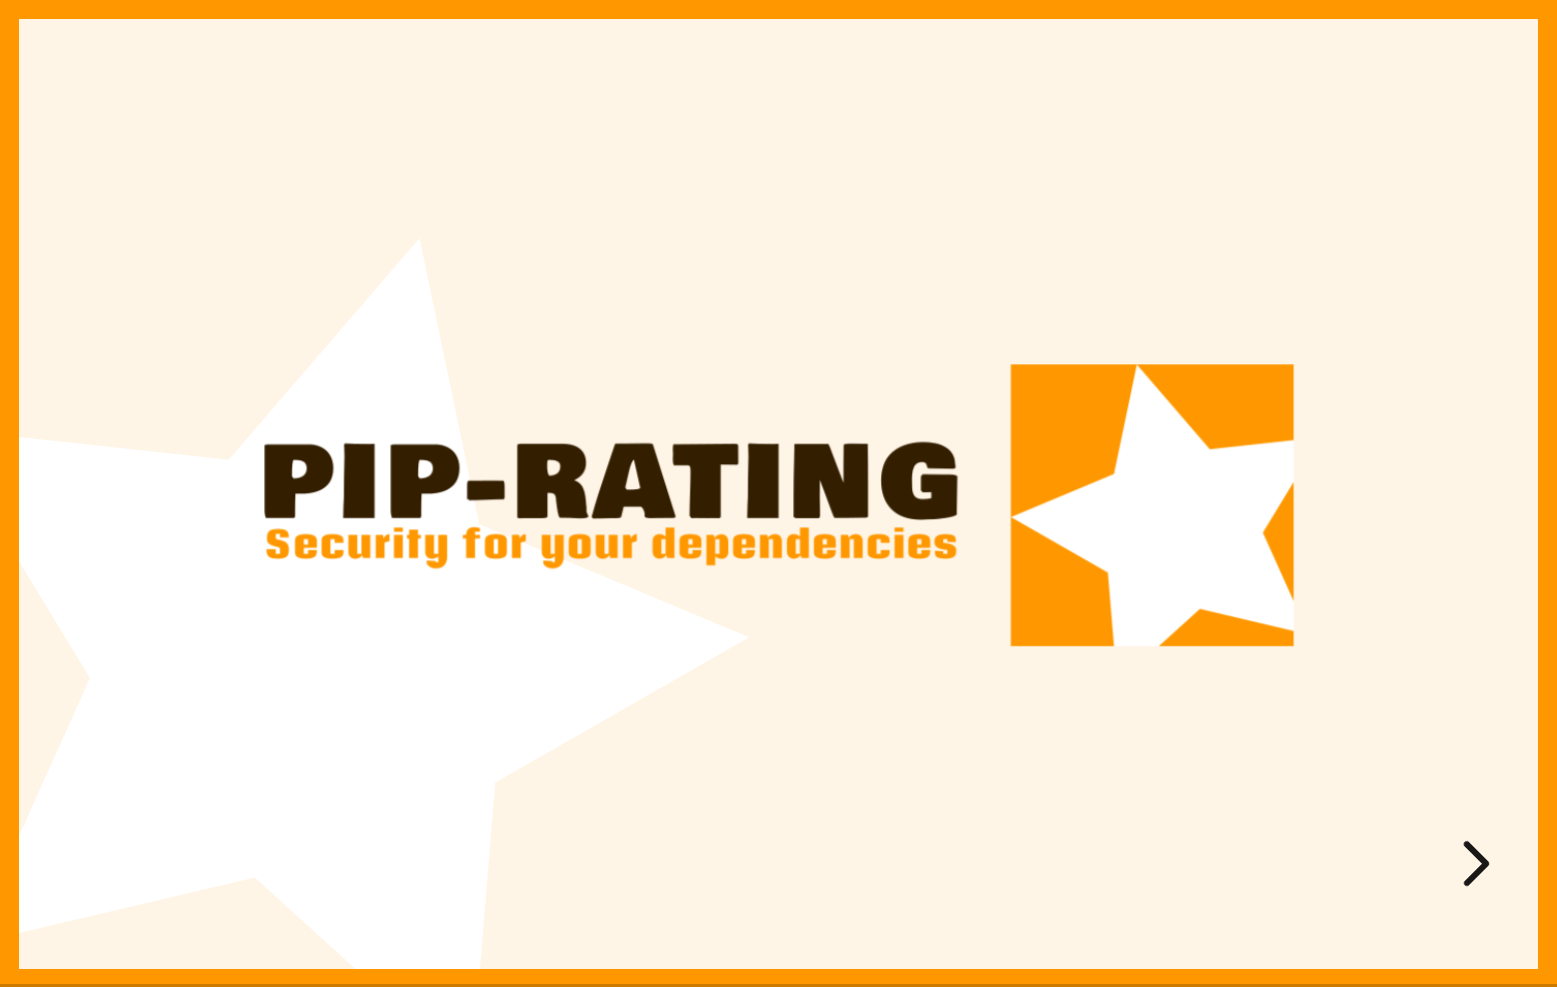 https://raw.githubusercontent.com/Nekmo/pip-rating-presentacion/master/logo.png